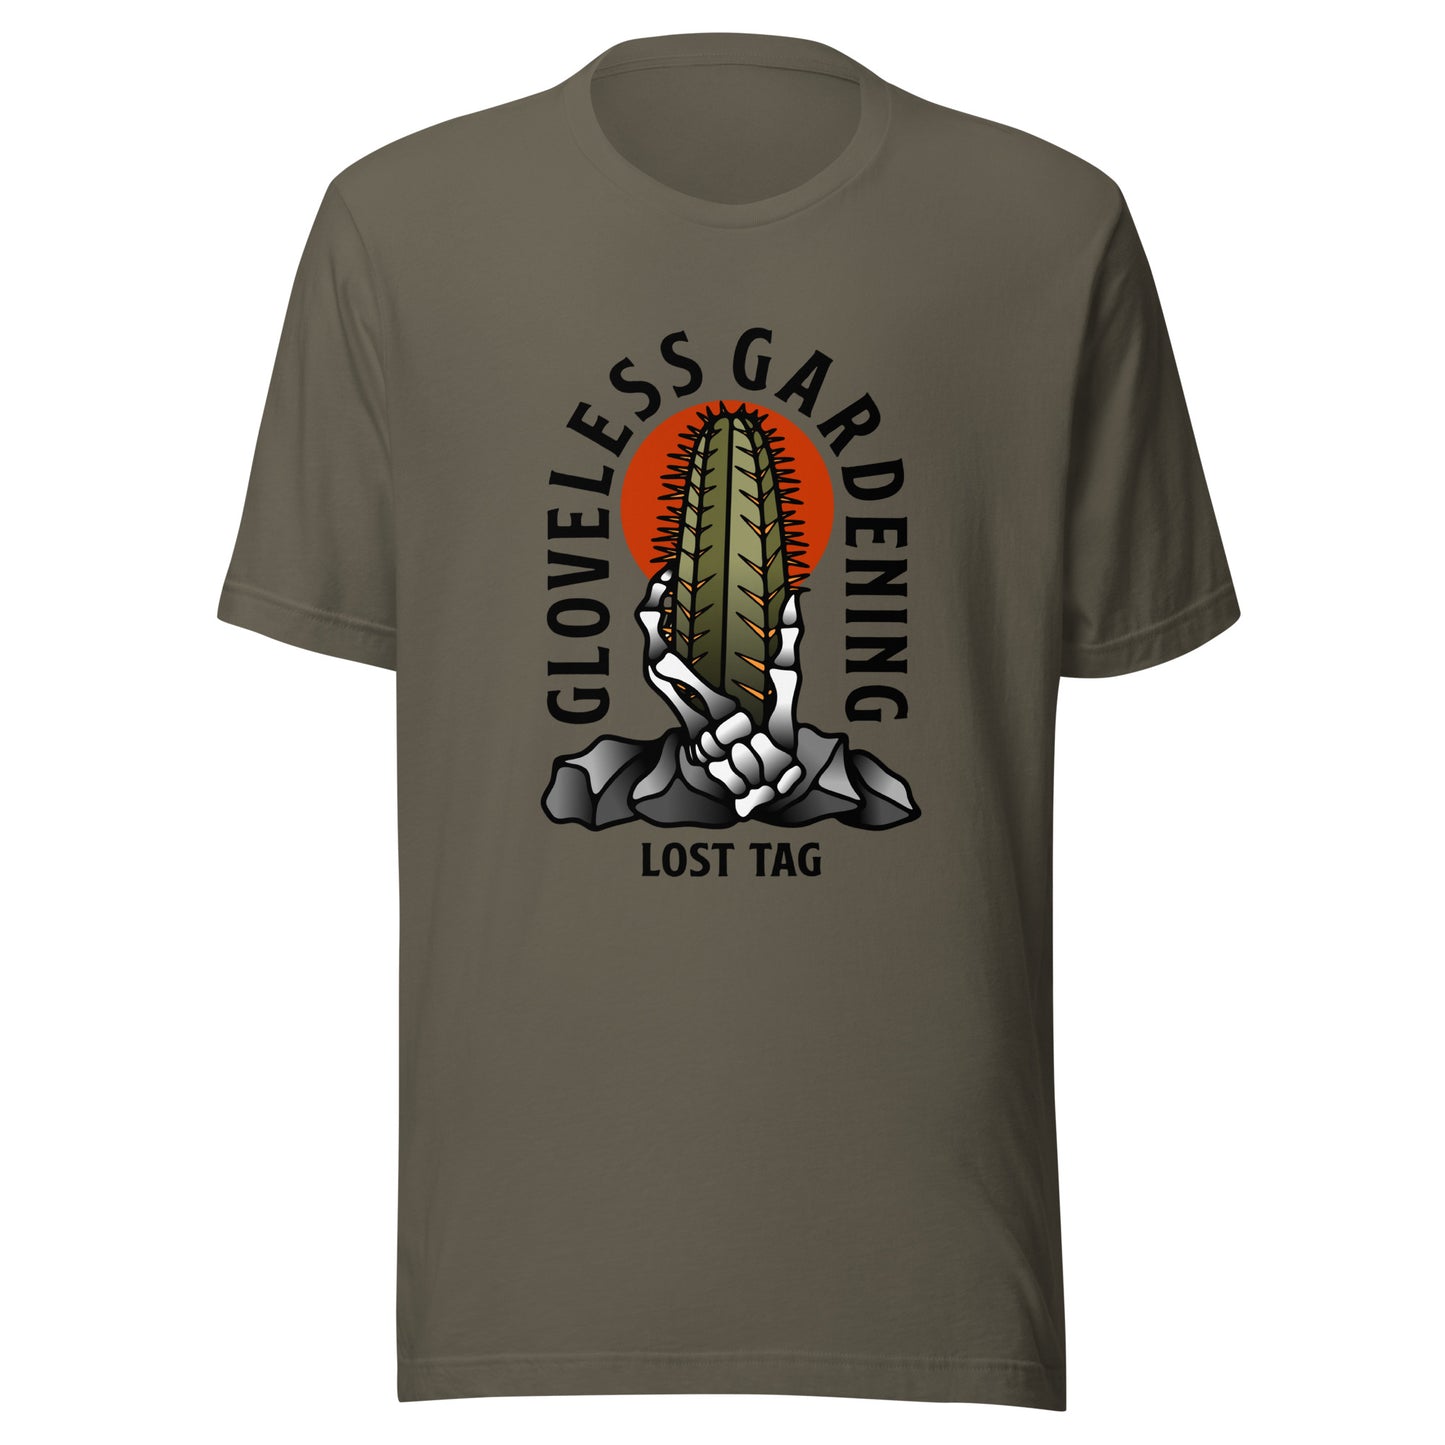 Gloveless Gardening unisex t-shirt